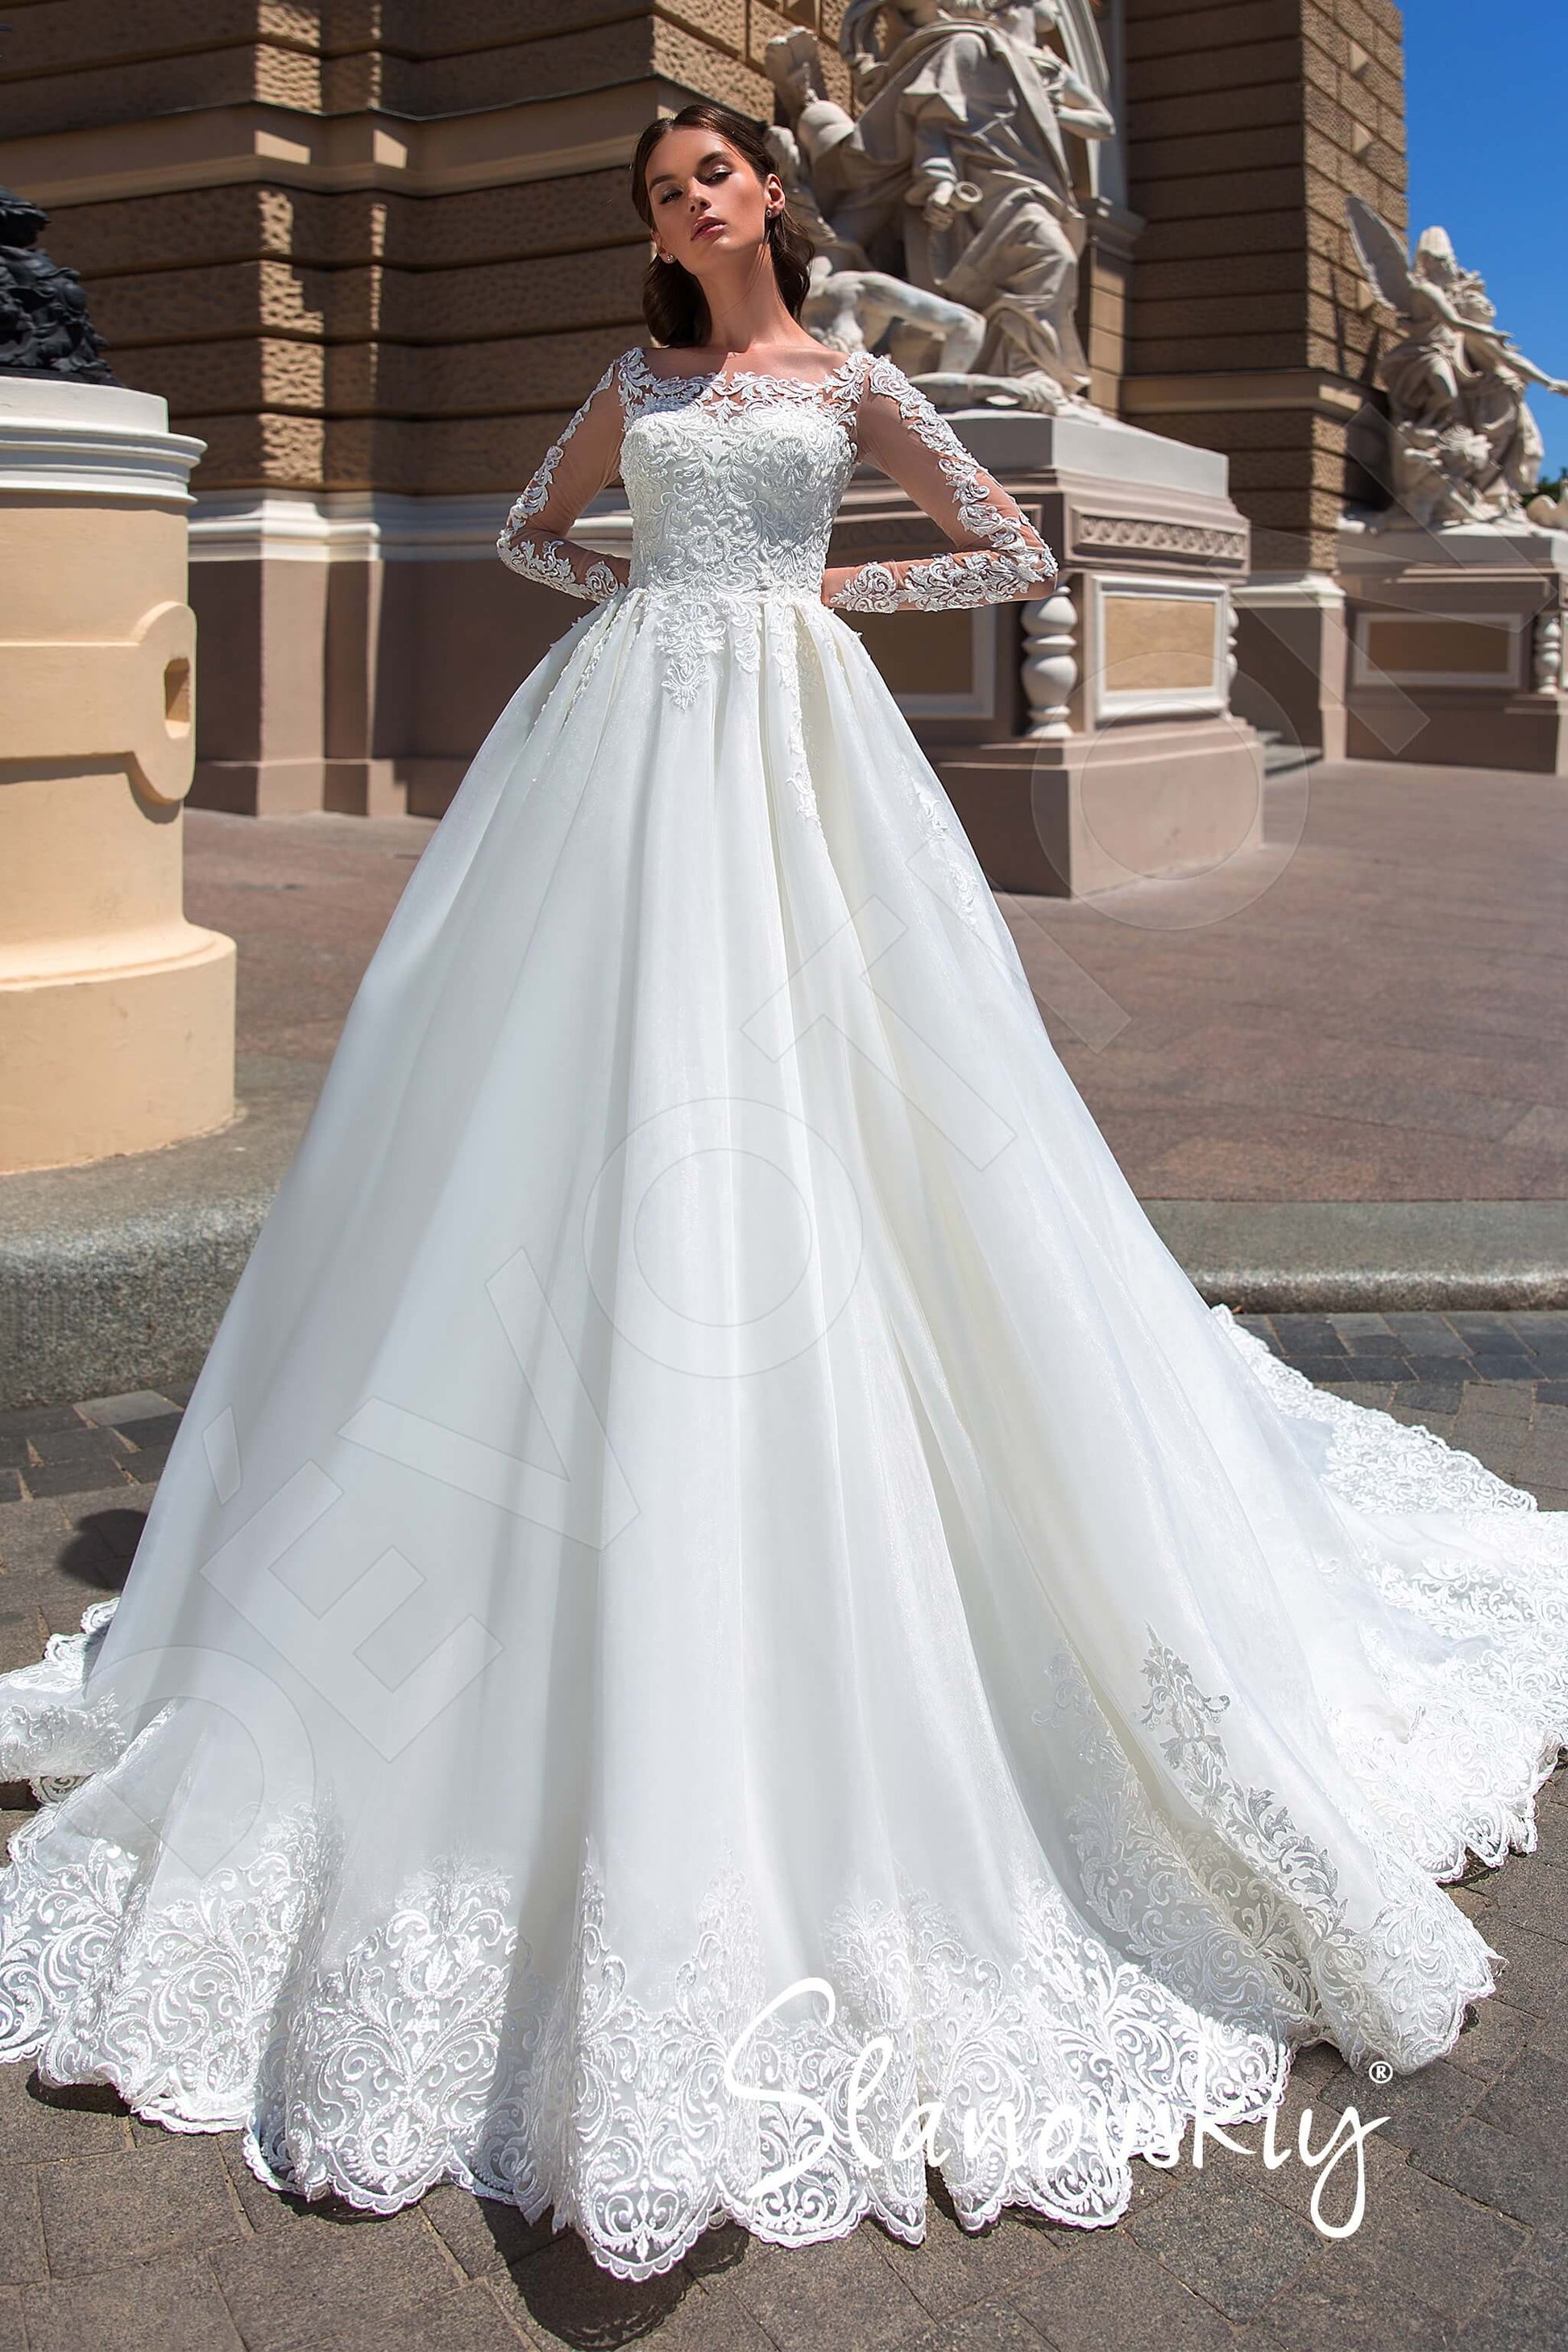 Lirika Princess/Ball Gown Illusion Cream Wedding dress